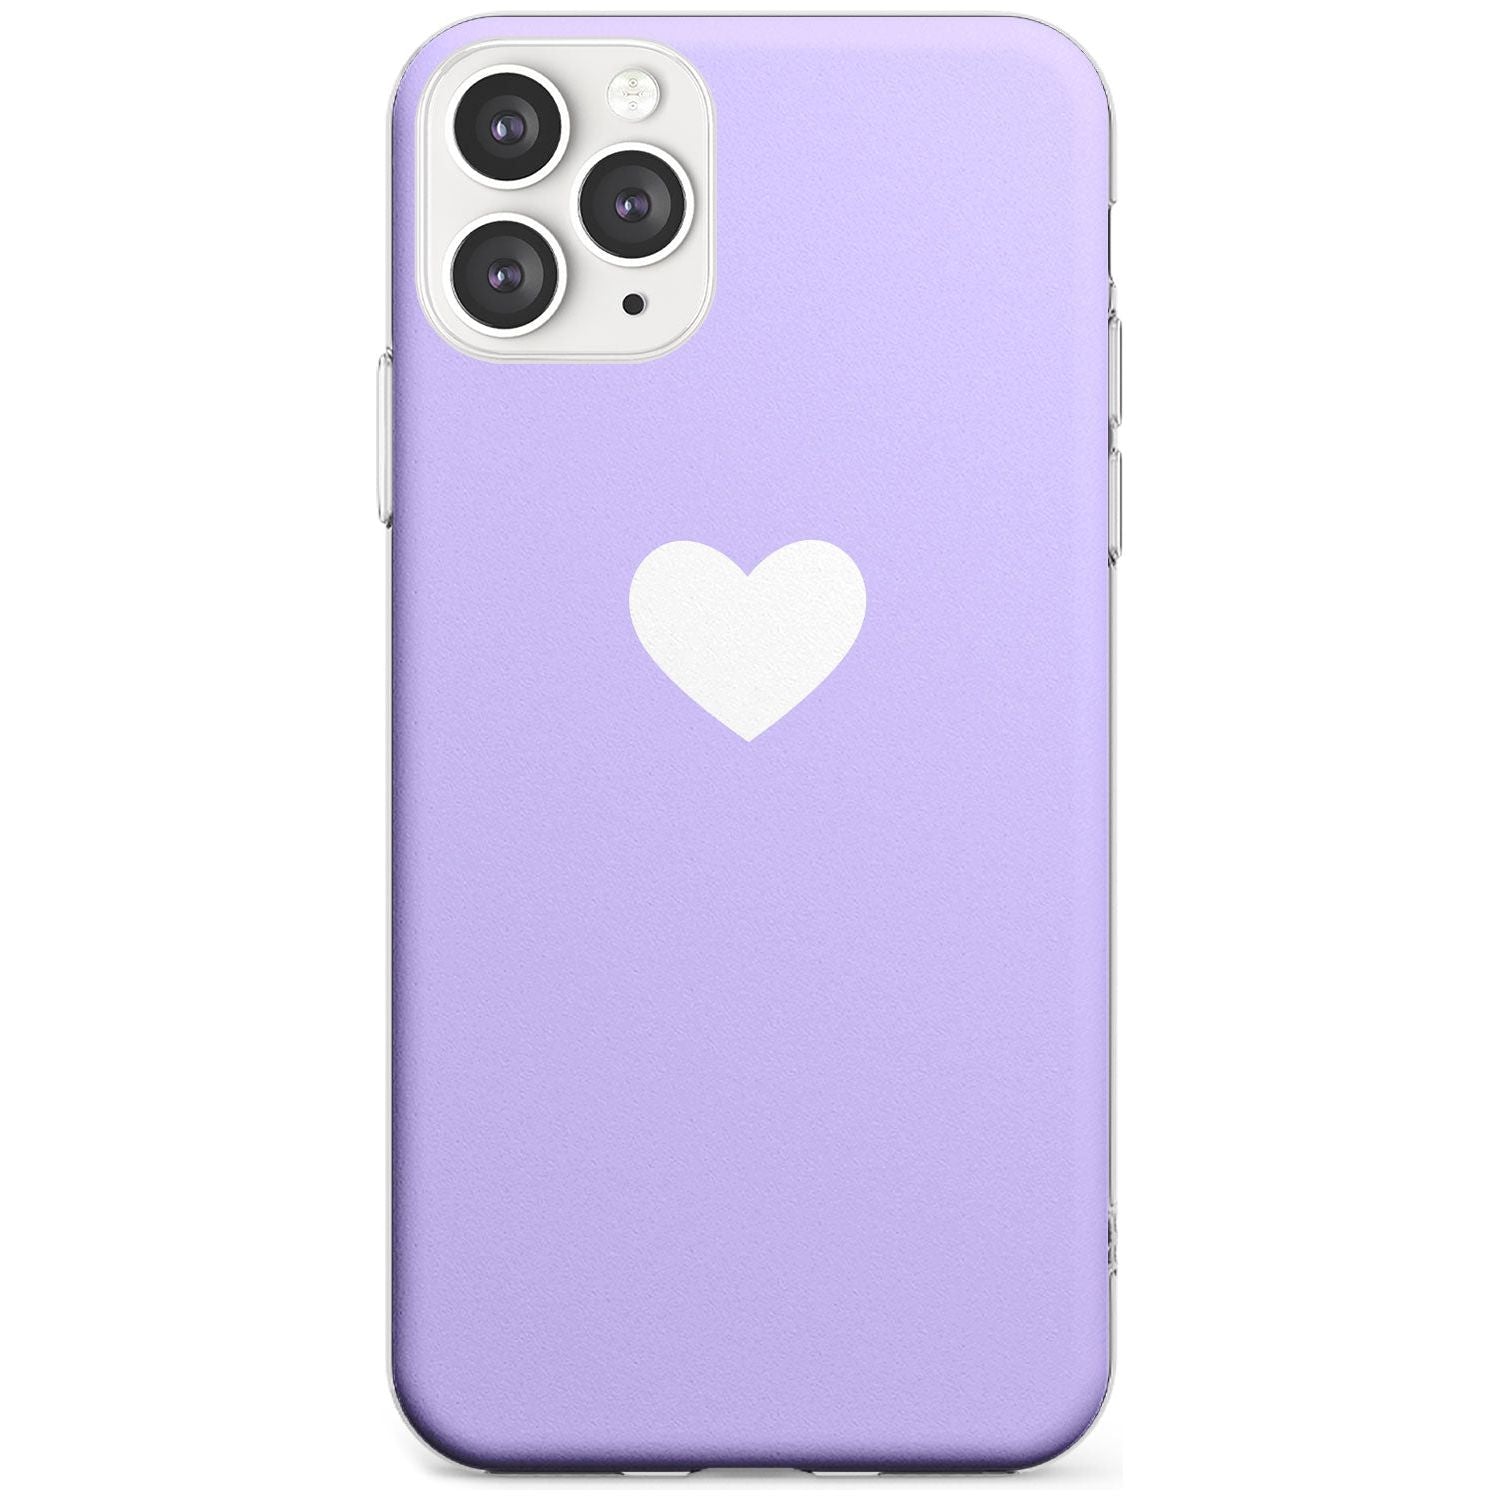 Single Heart White & Pale Purple Slim TPU Phone Case for iPhone 11 Pro Max